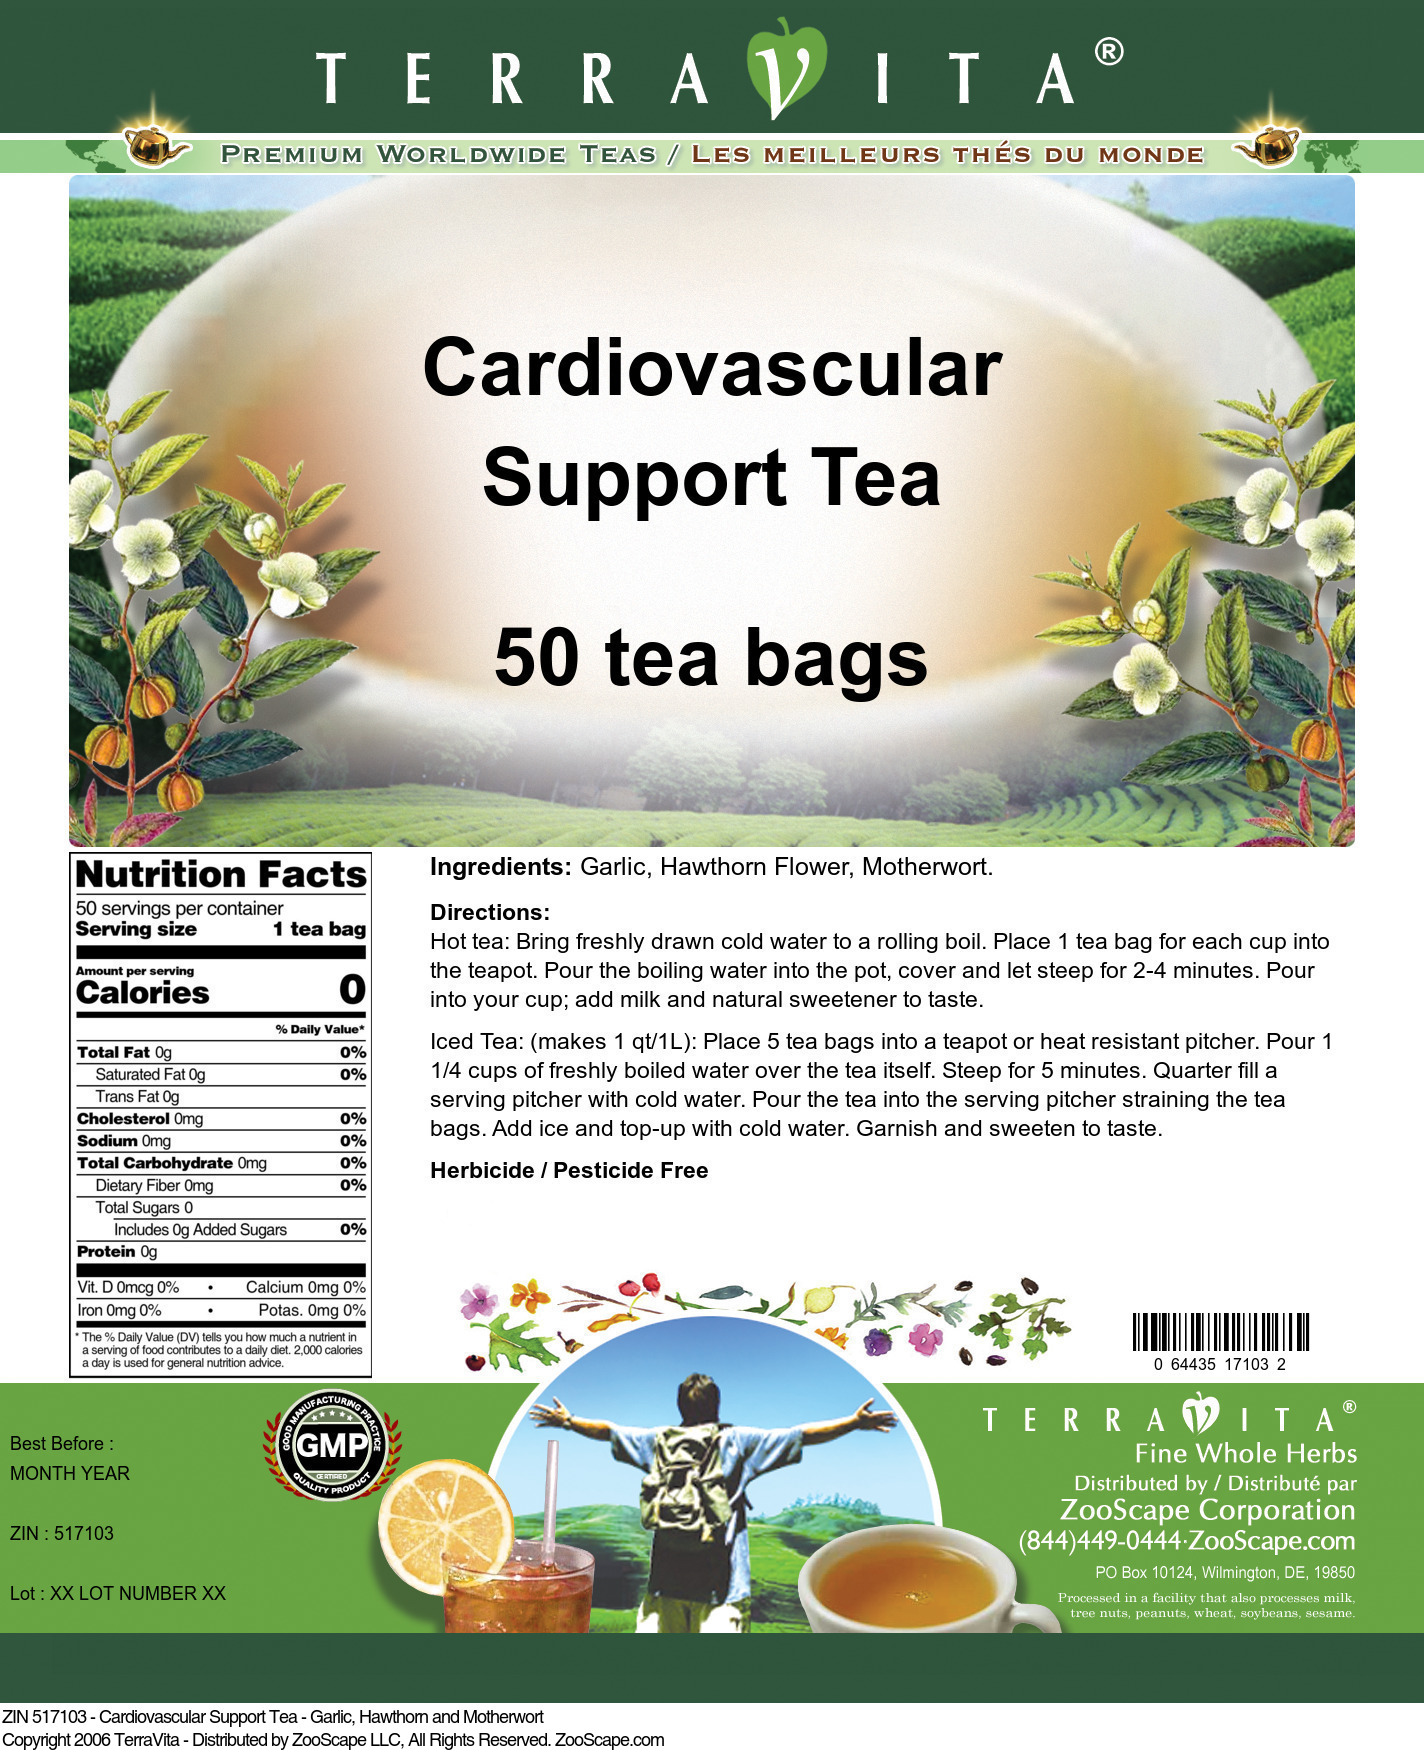 Cardiovascular Support Tea - Garlic, Hawthorn and Motherwort - Label